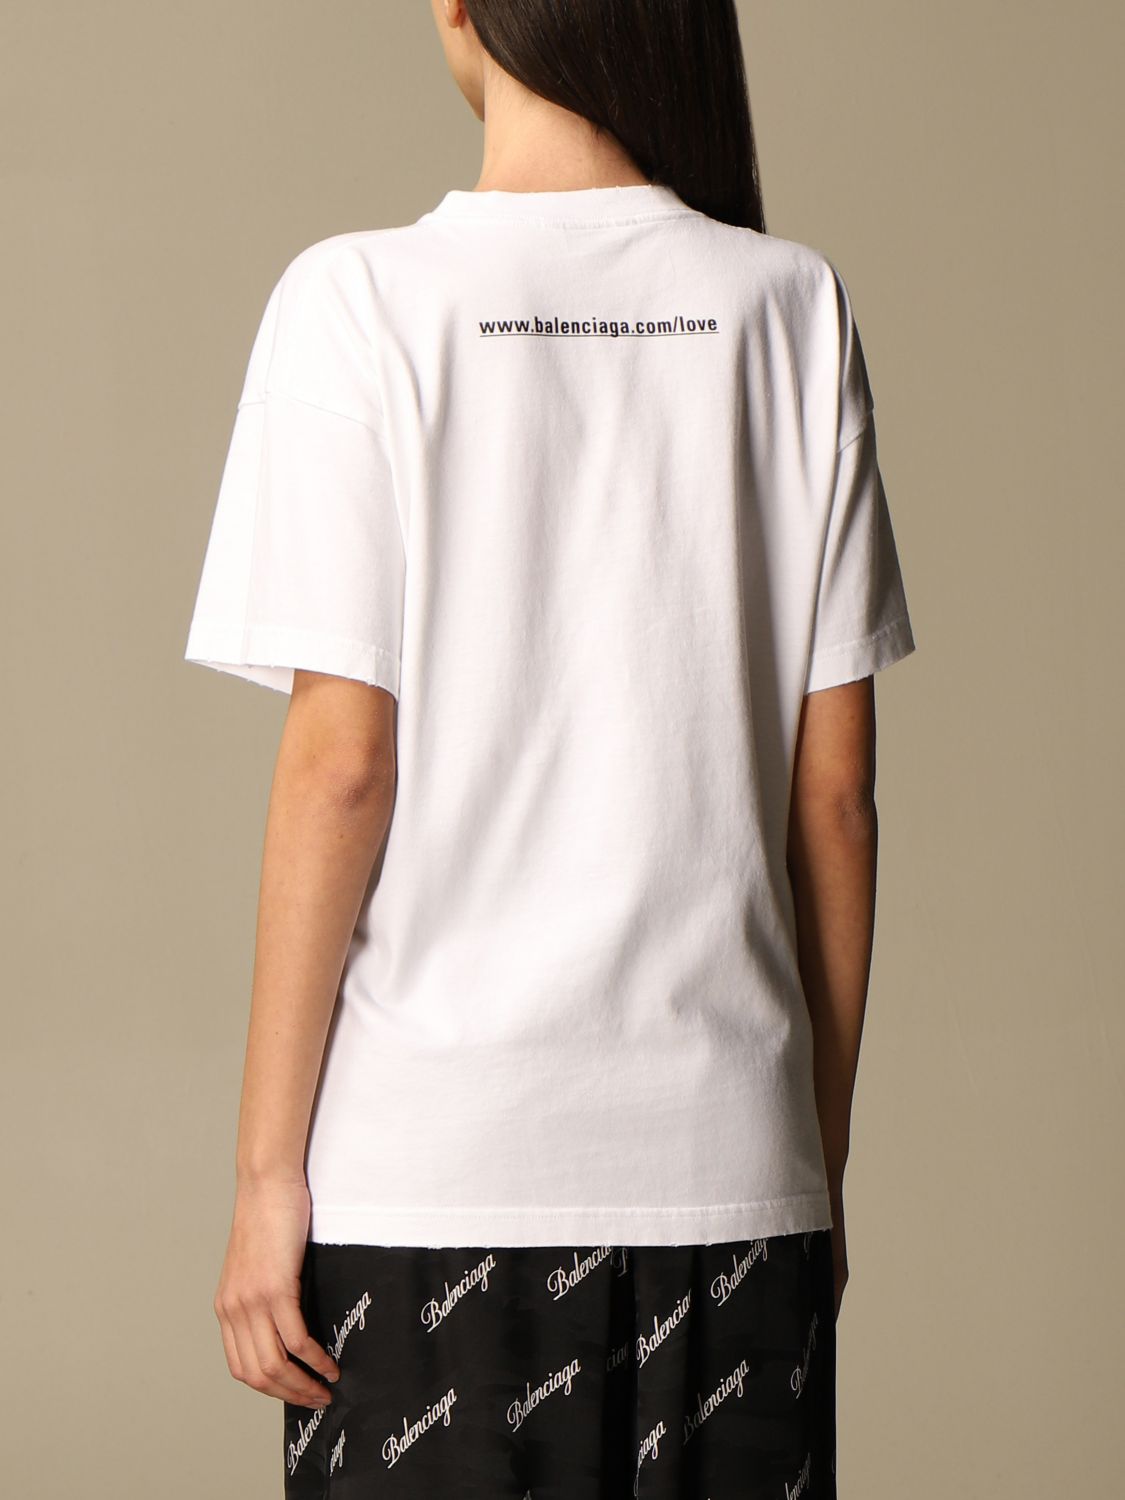 Balenciaga White Logo T-Shirt